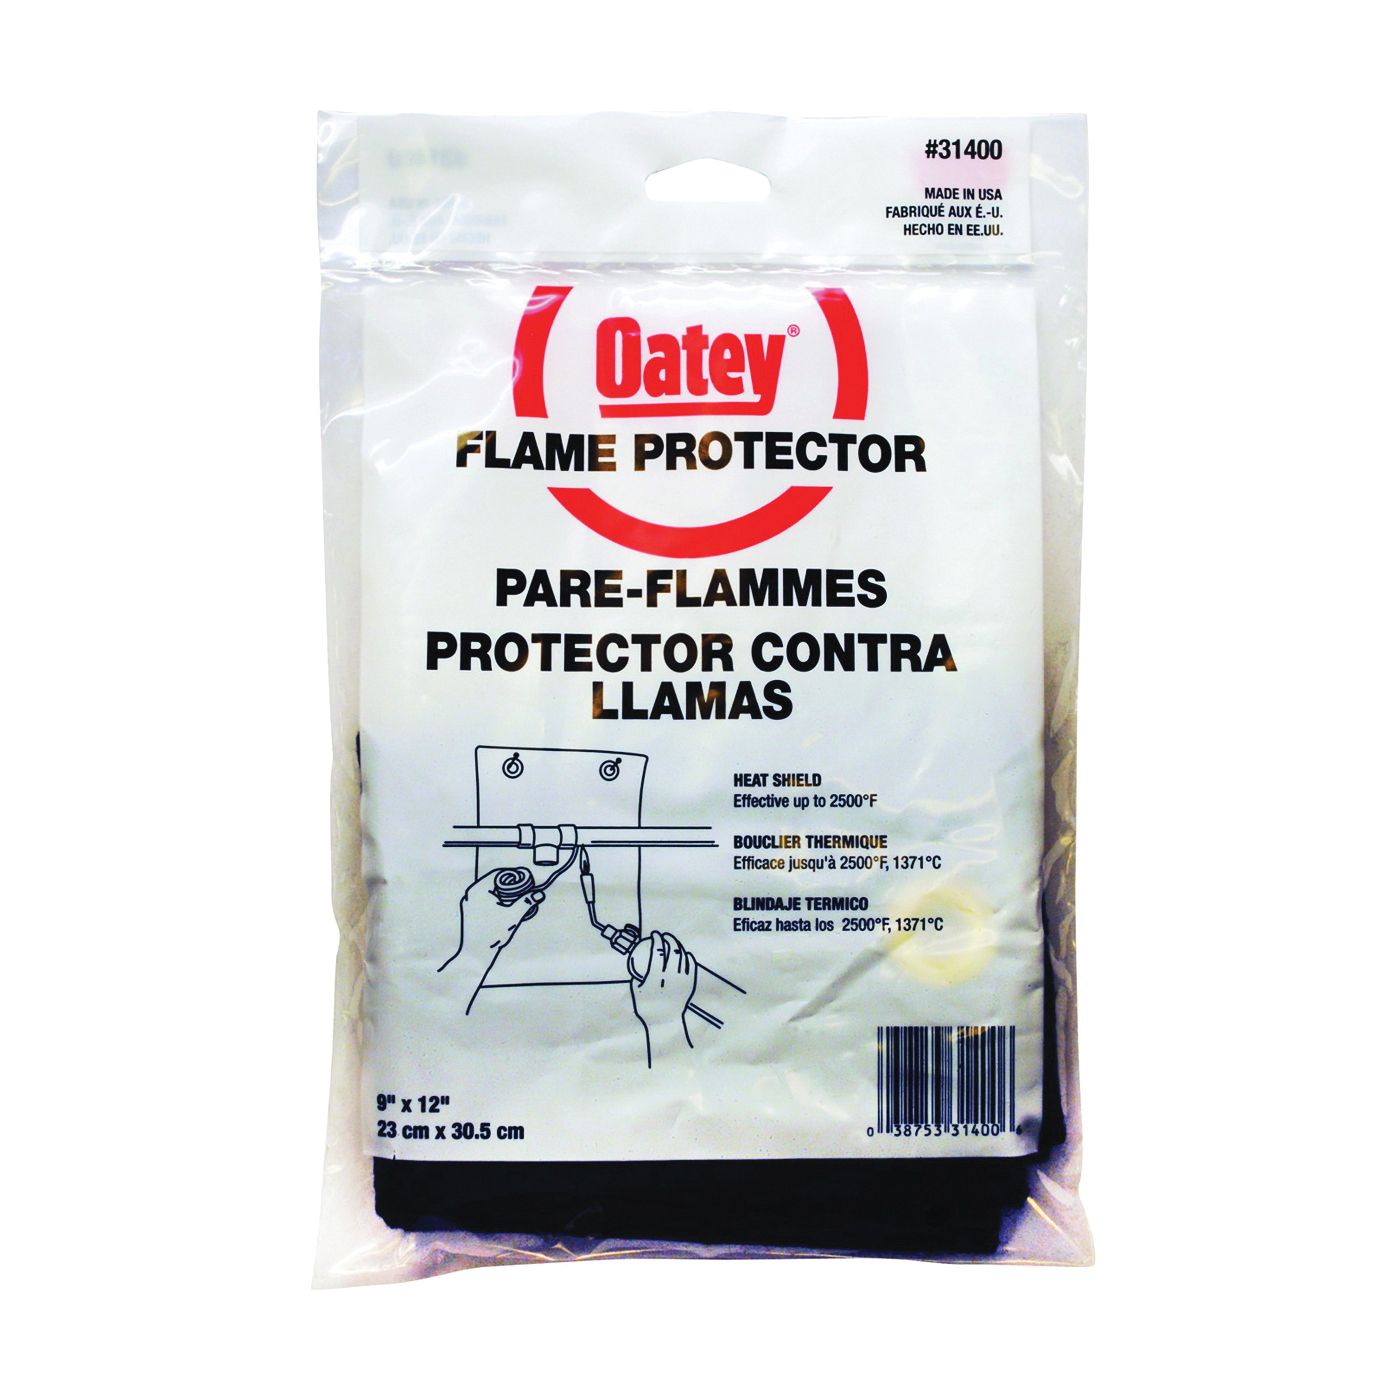 Oatey 31400 Flame Protector, Zoltek Pyron Fiber - 1